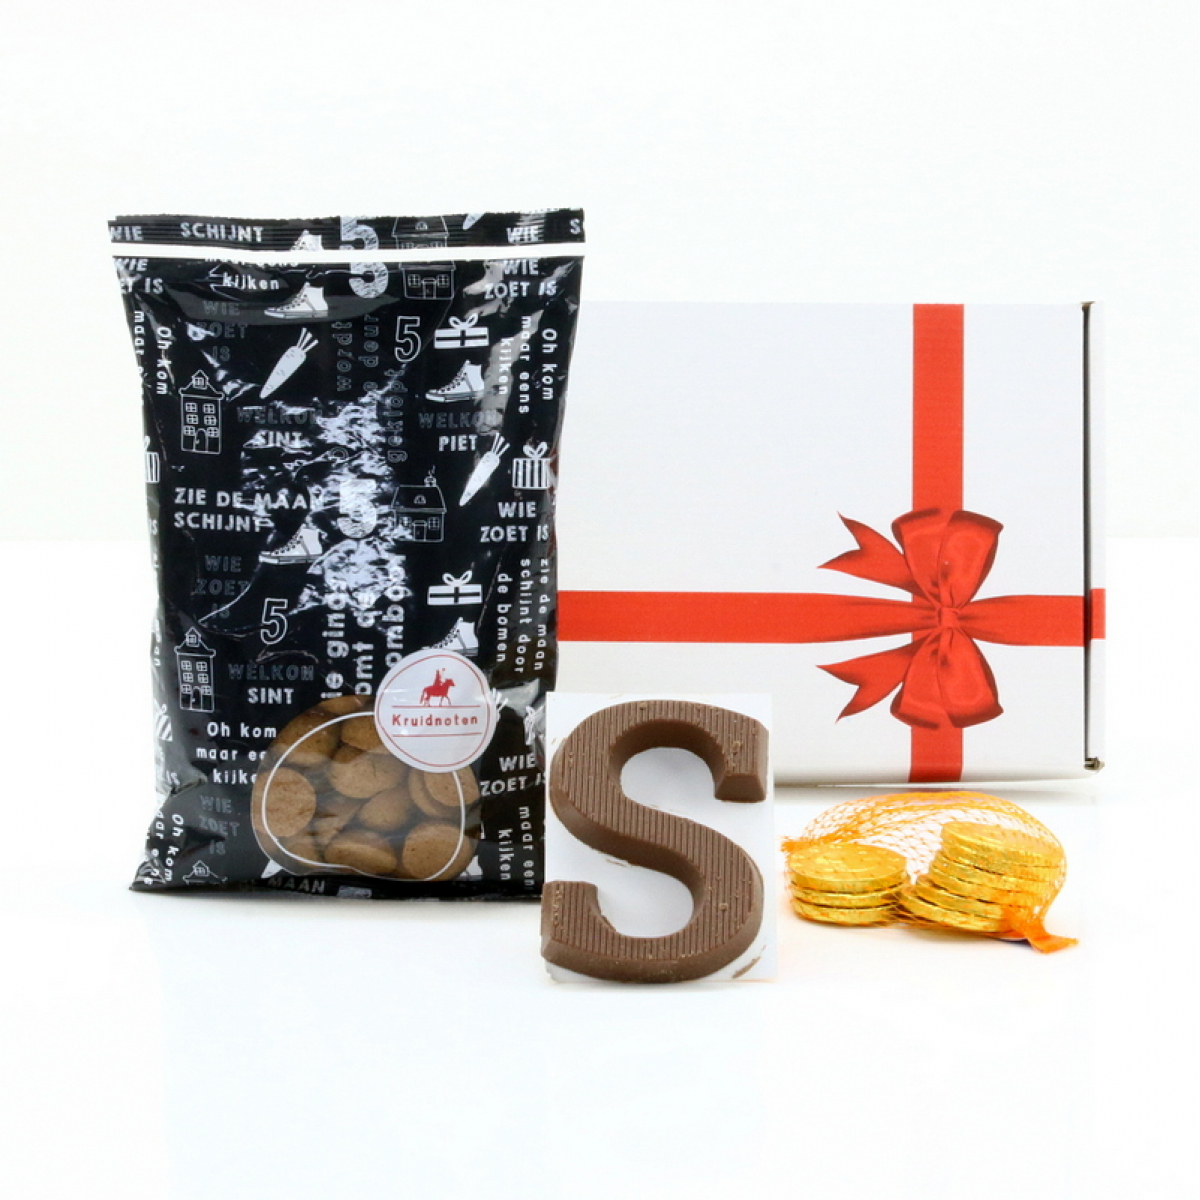 Sinterklaas chocolade, kruidnoten en chocolade munten 